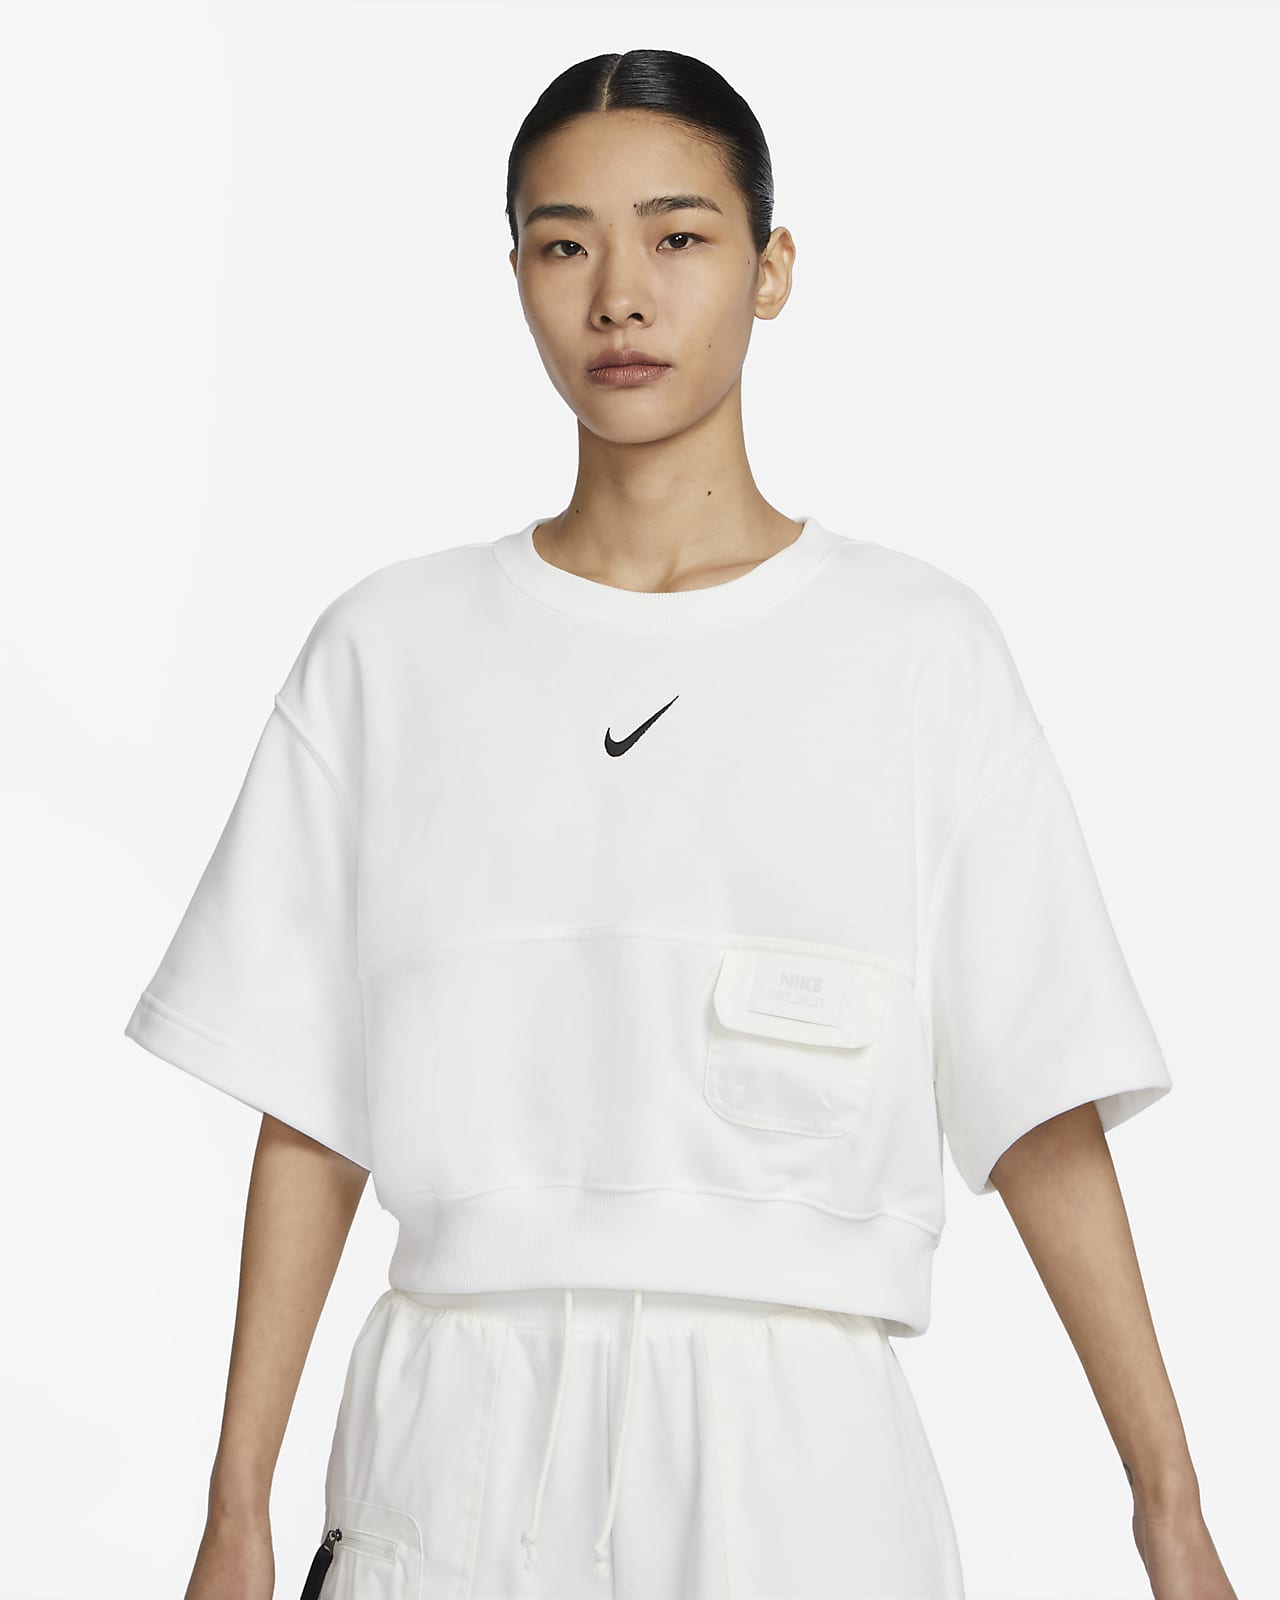 Nike Sportswear City Utility Women's French Terry Short-Sleeve Top